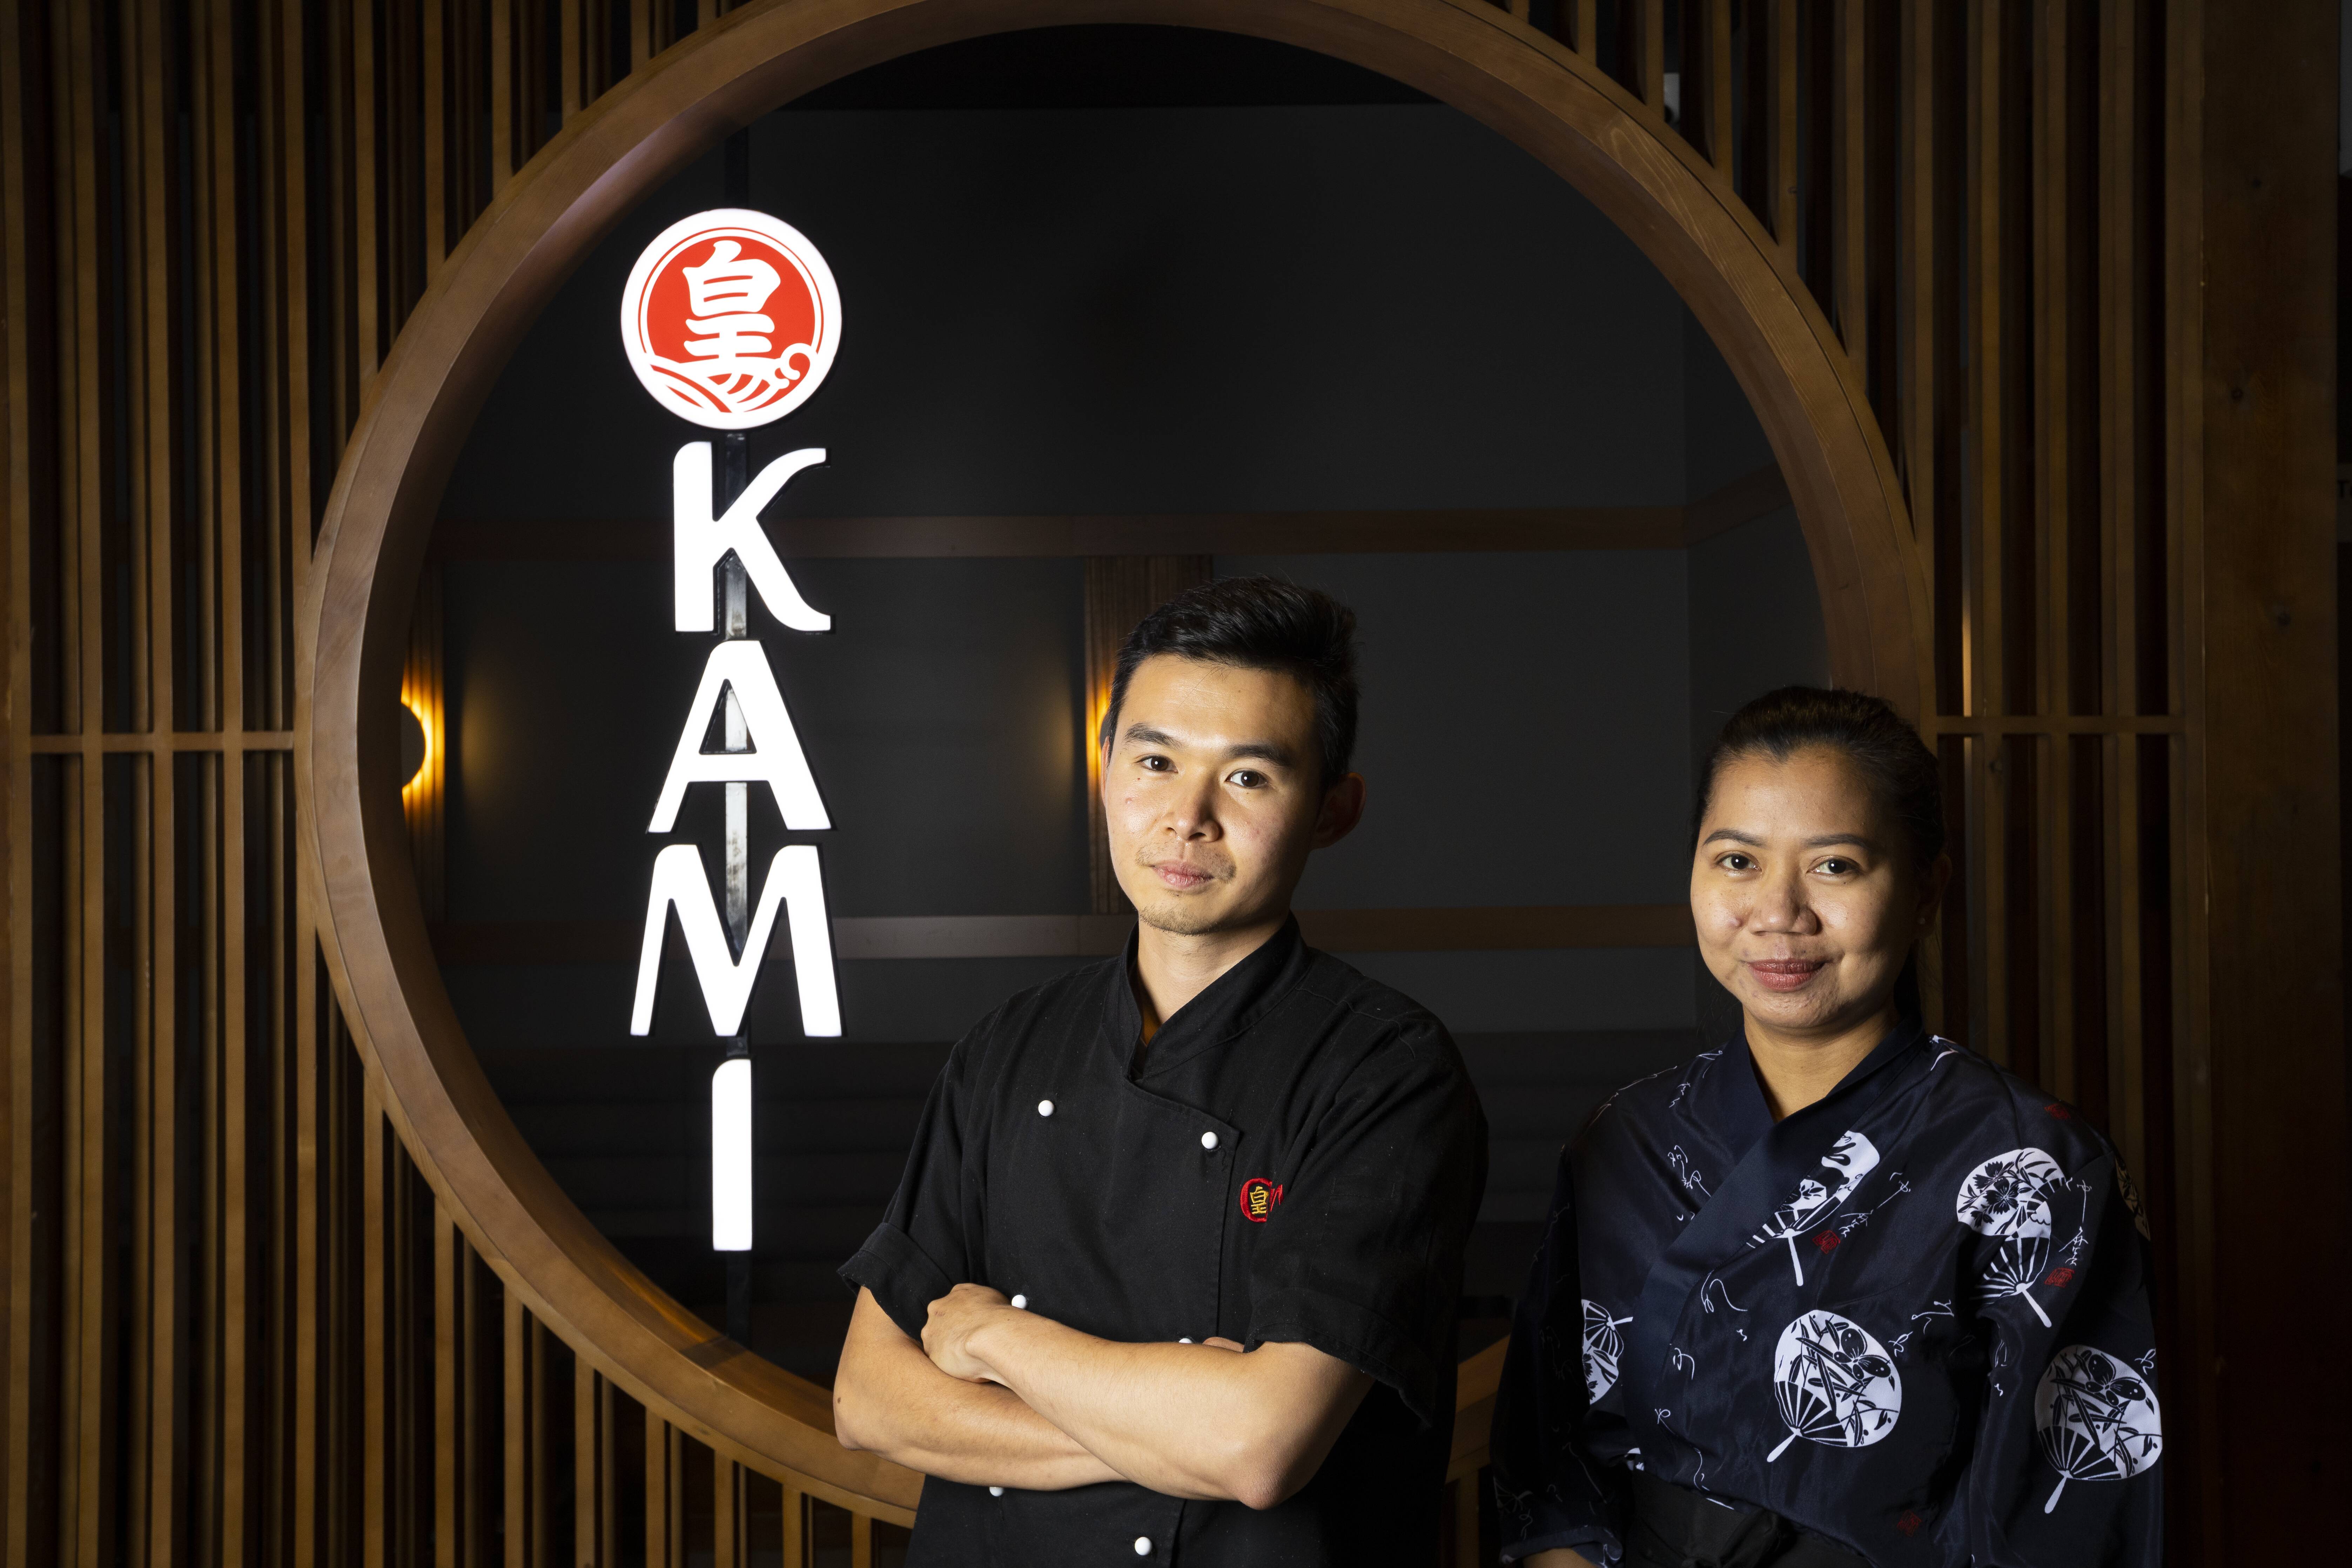 Okami Japanese Restaurant - Wagga Wagga - Visit Wagga